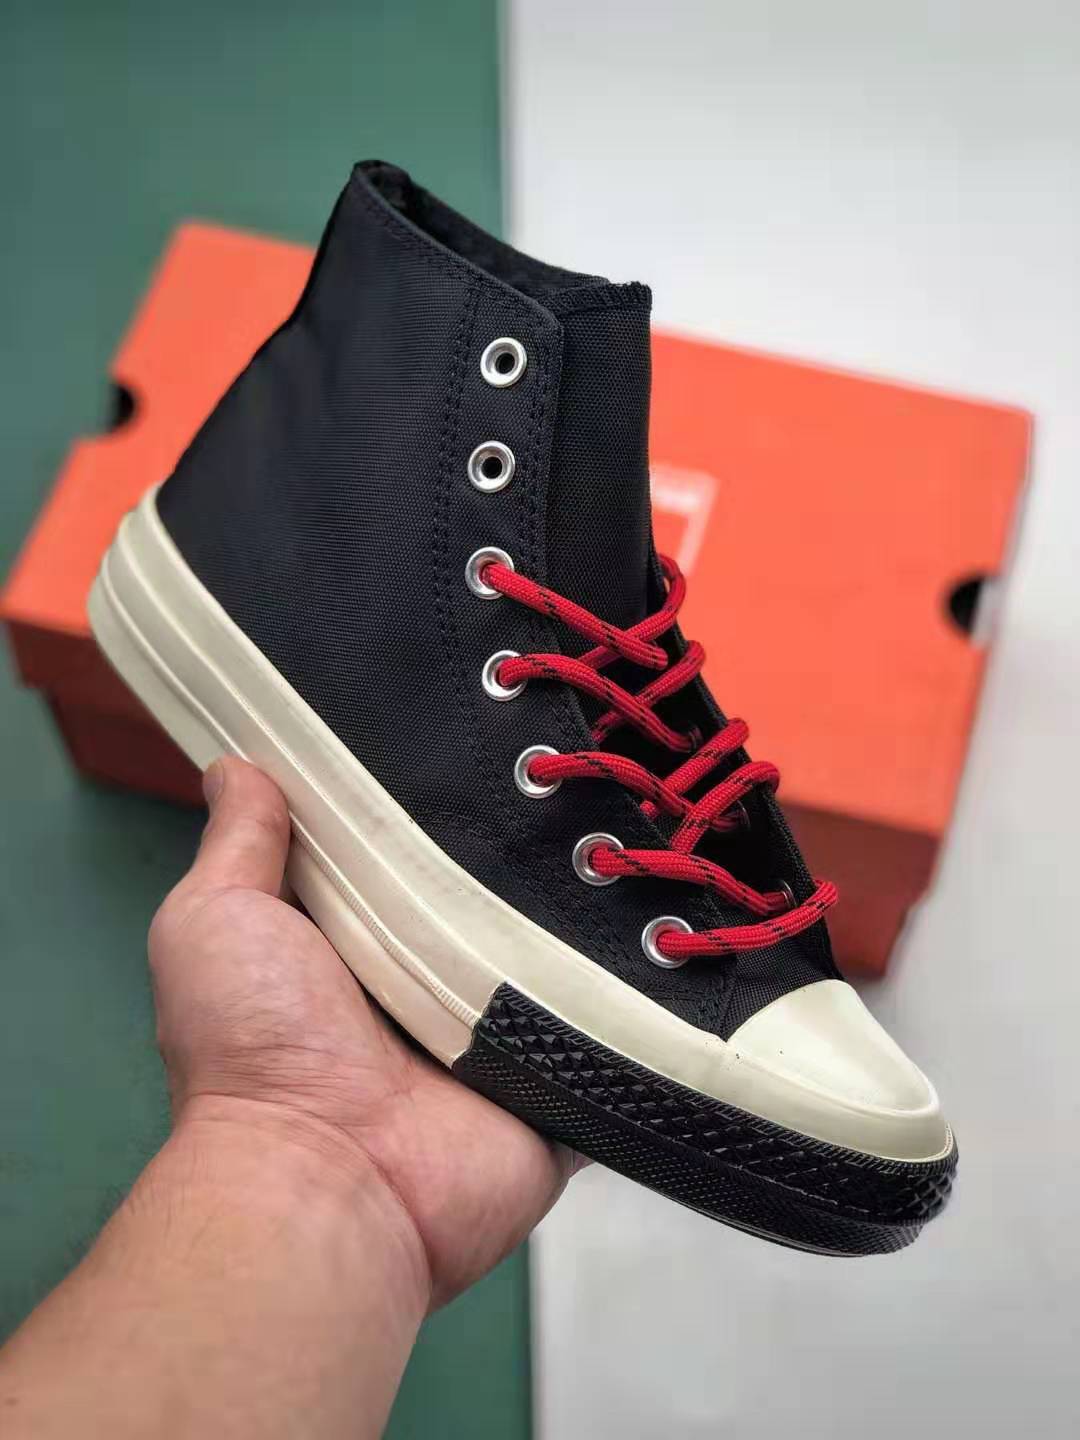 Converse Chuck 1970s Hi 'Red Black' 161479C - Classic Retro Style Sneakers